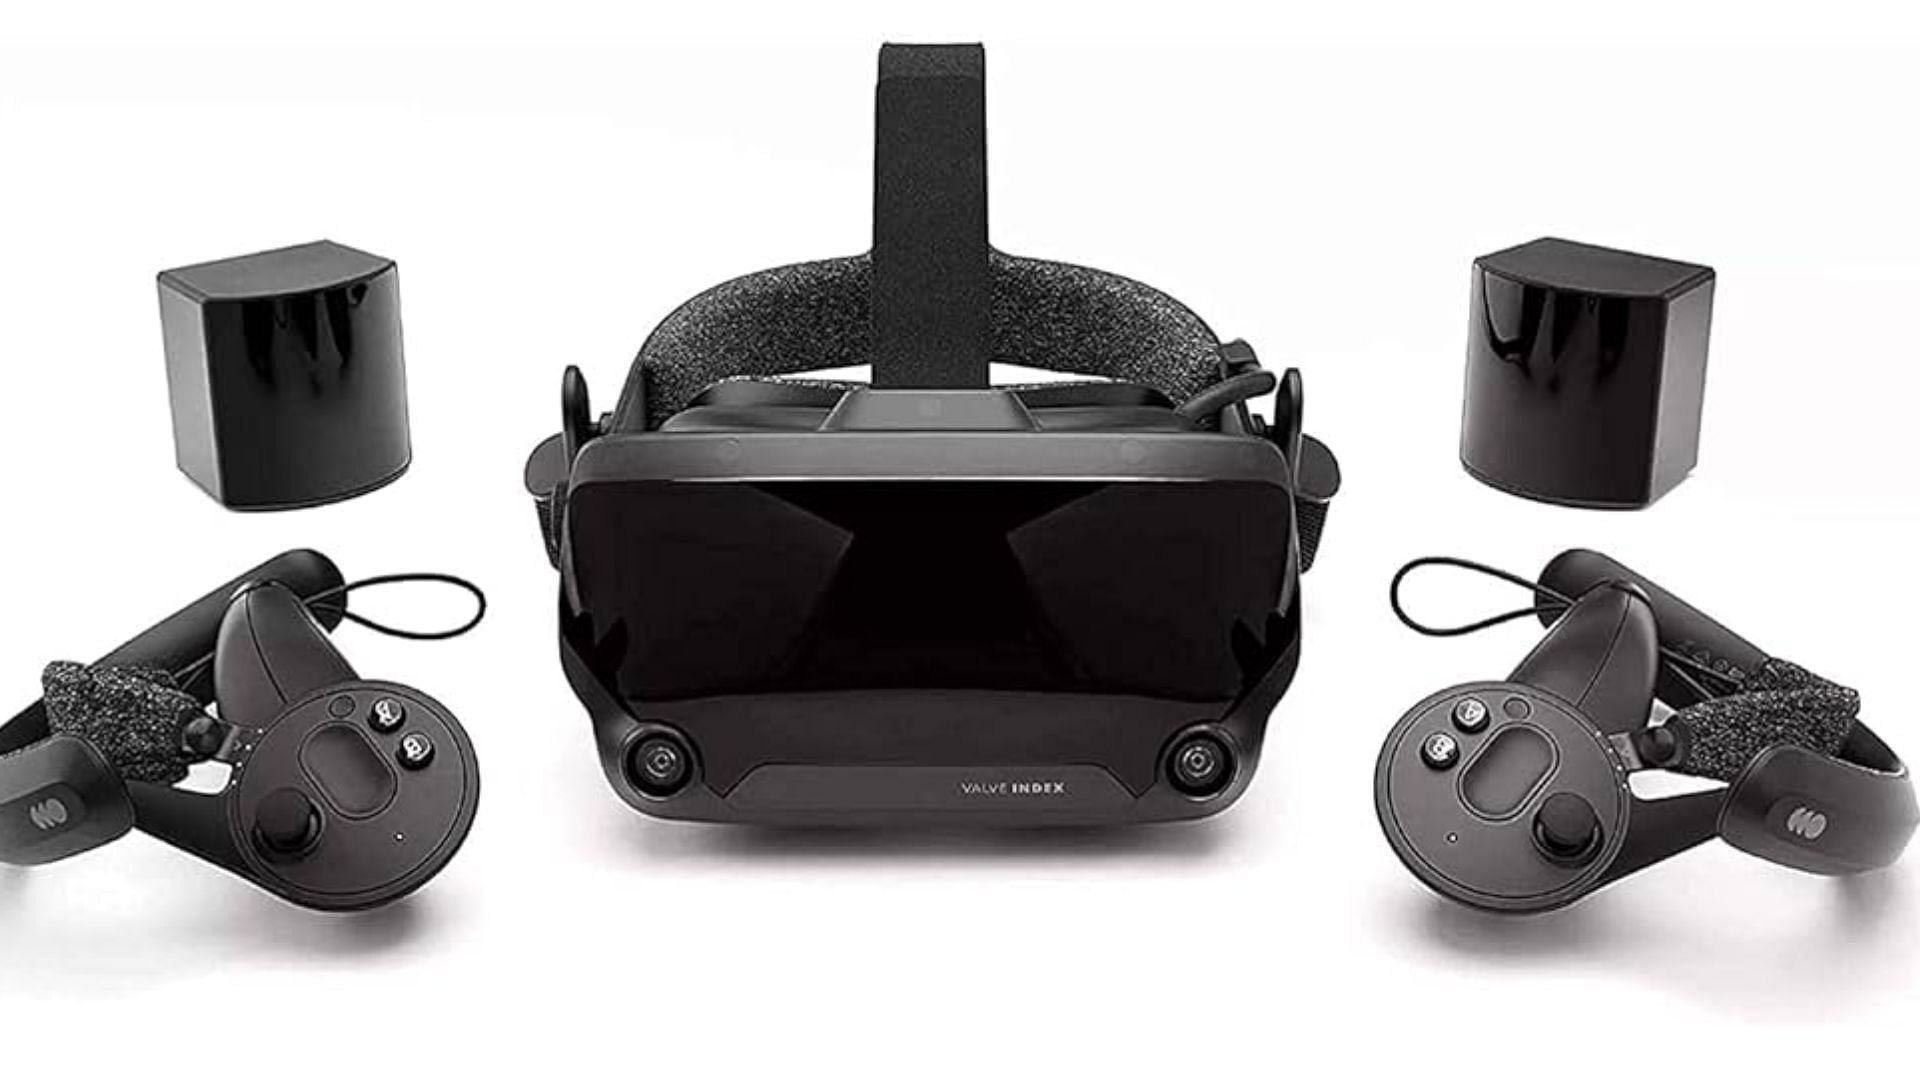 Premium VR headset kit (Image via Valve Insex/Amazon)